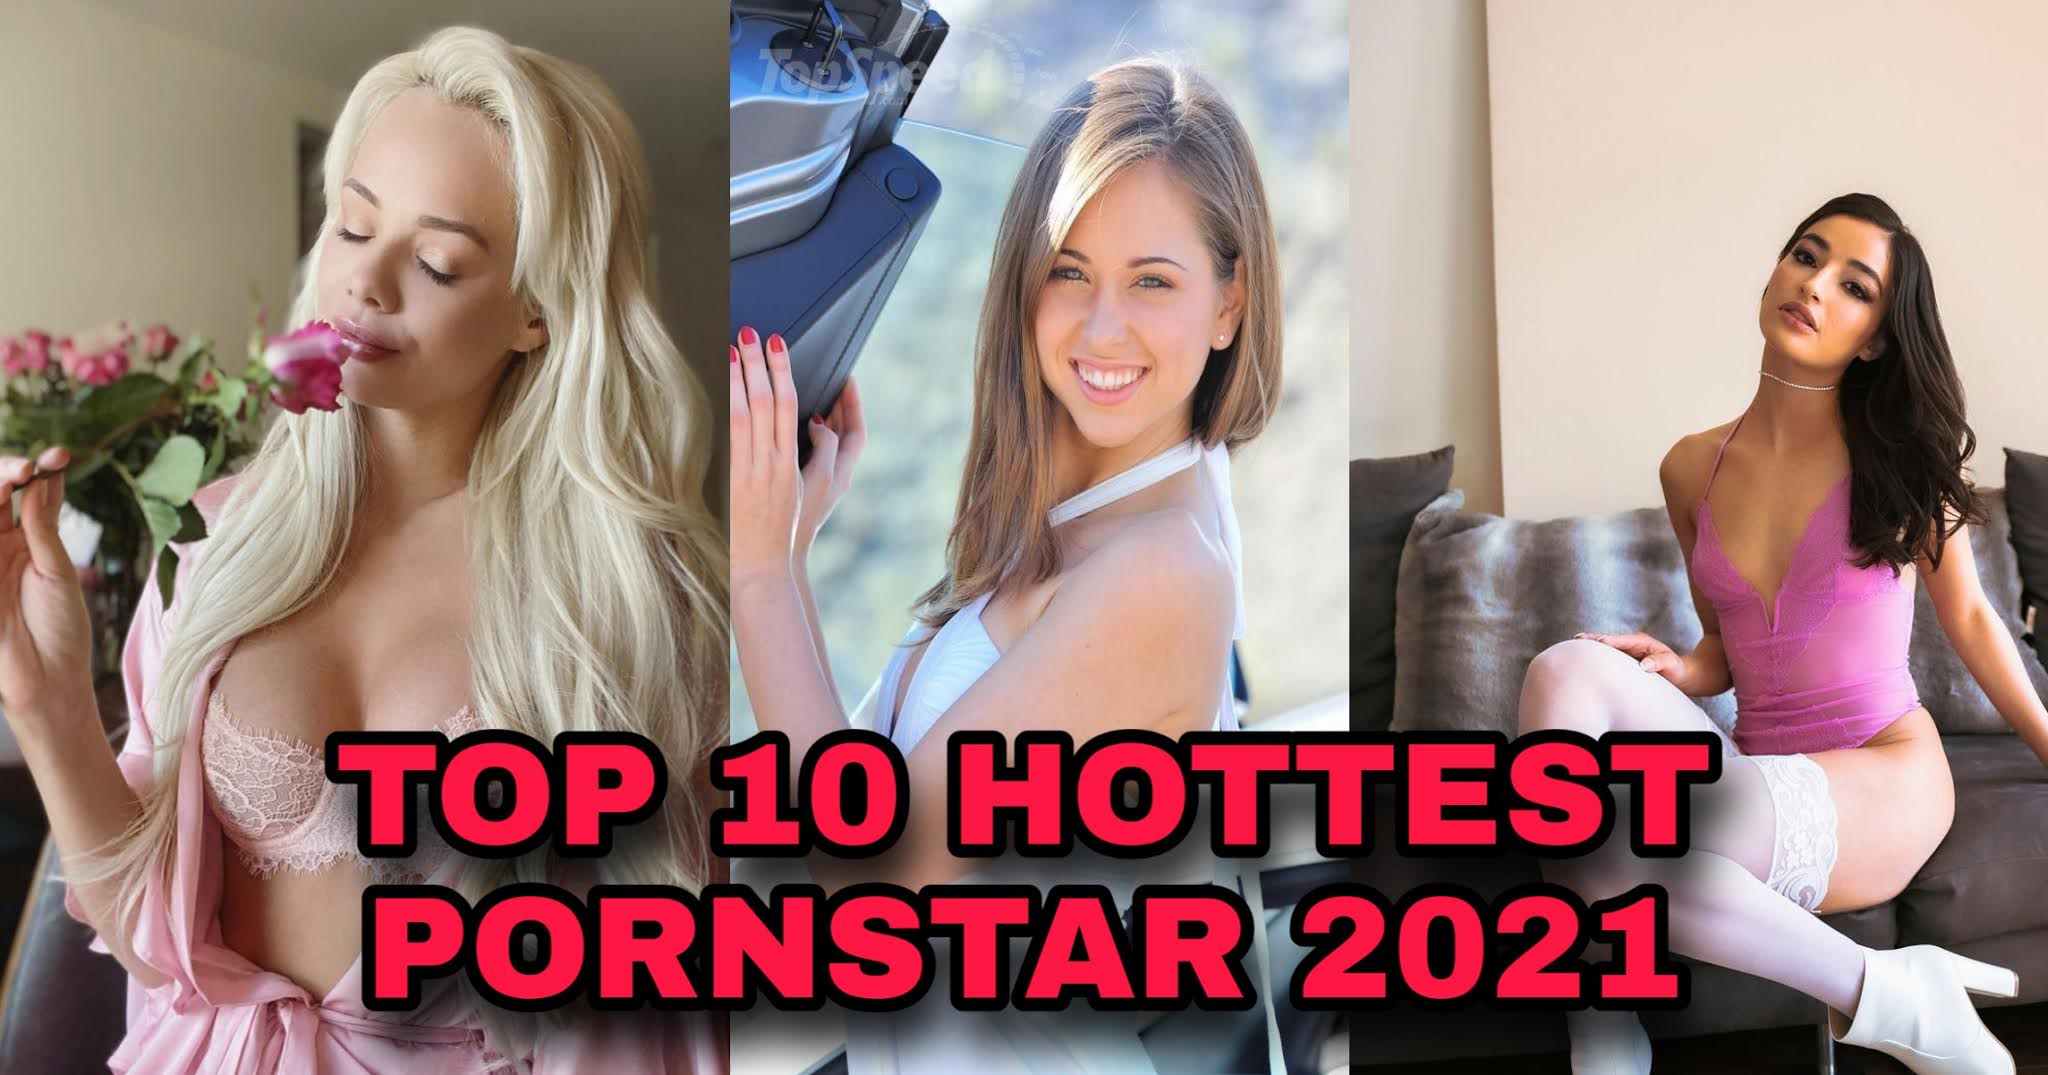 Top porn star 2021